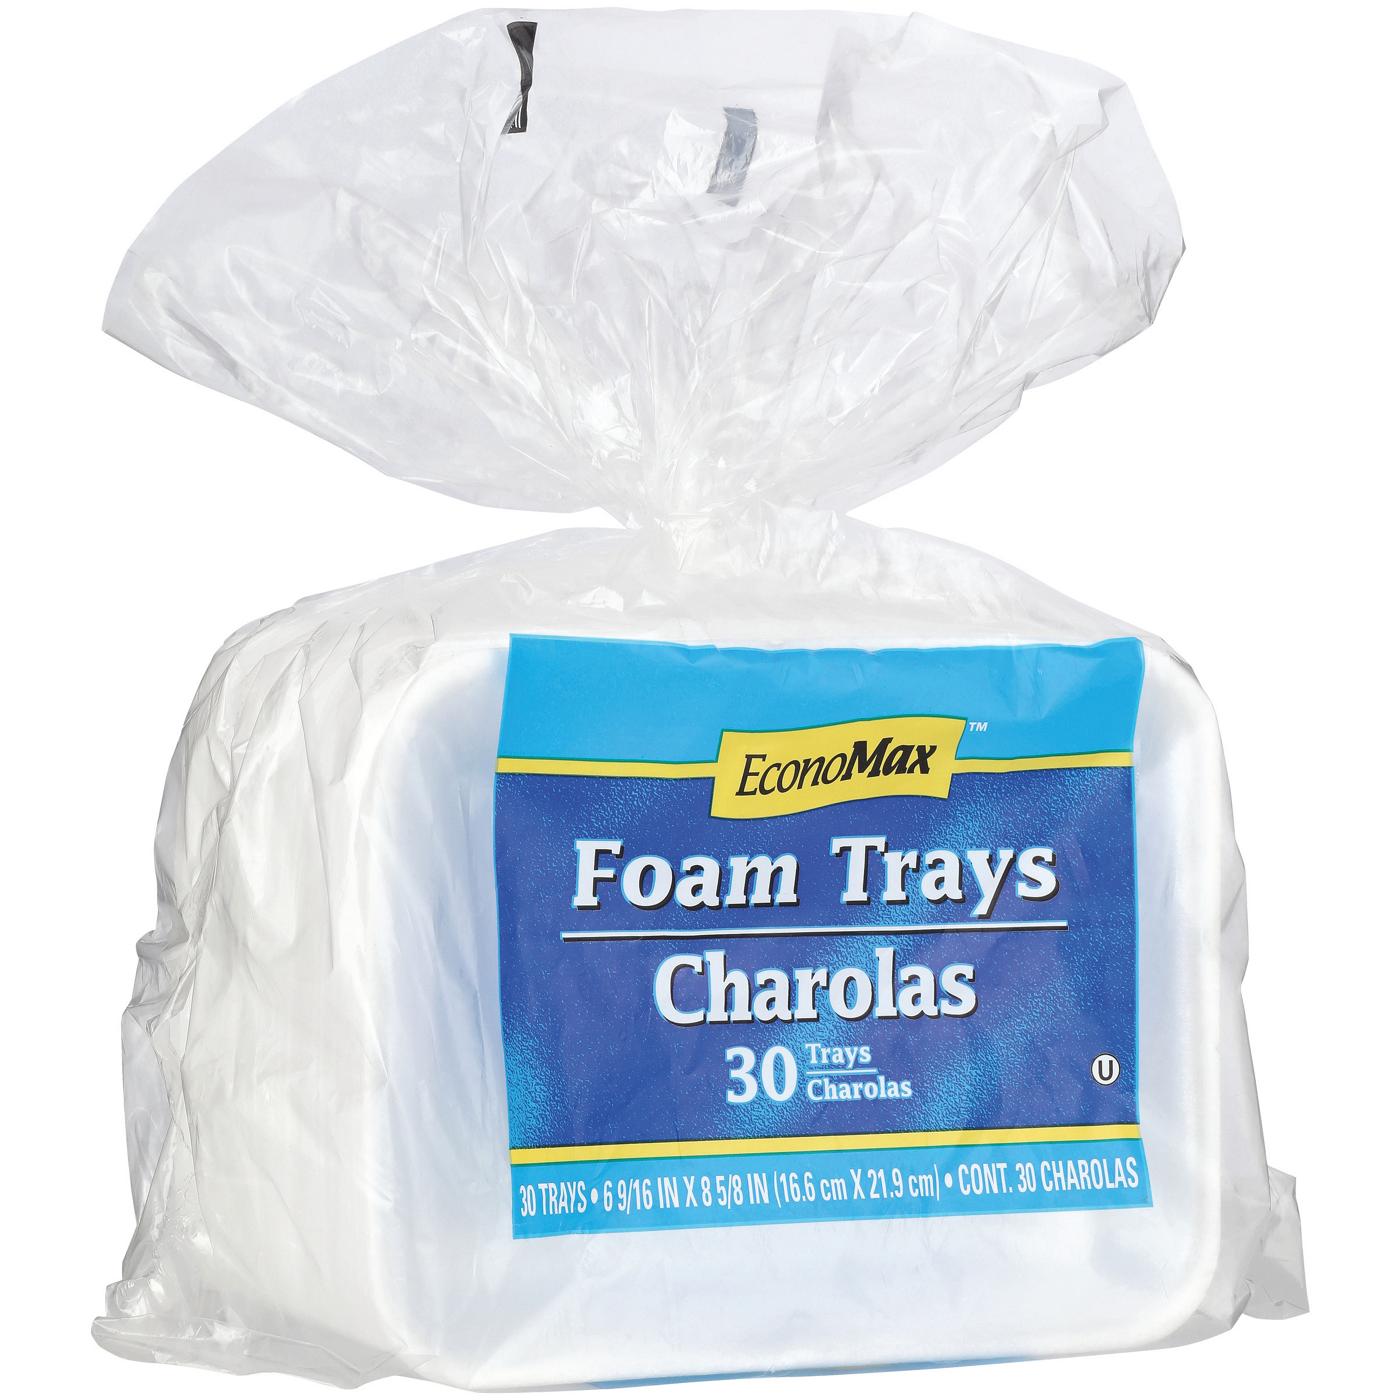 EconoMax Foam Trays; image 2 of 2